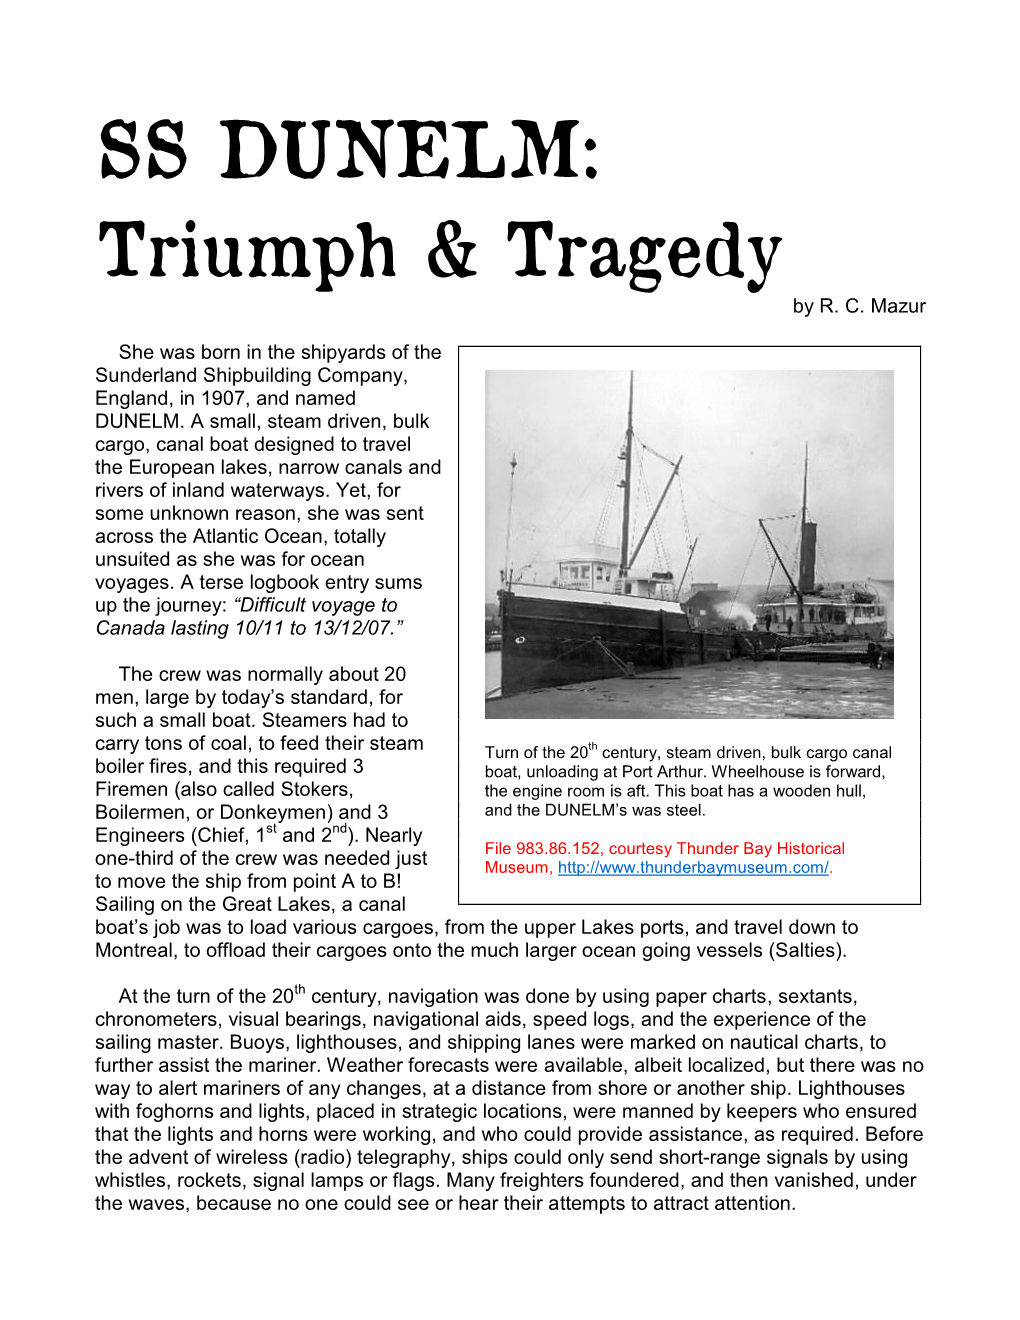 SS DUNELM: Triumph & Tragedy by R